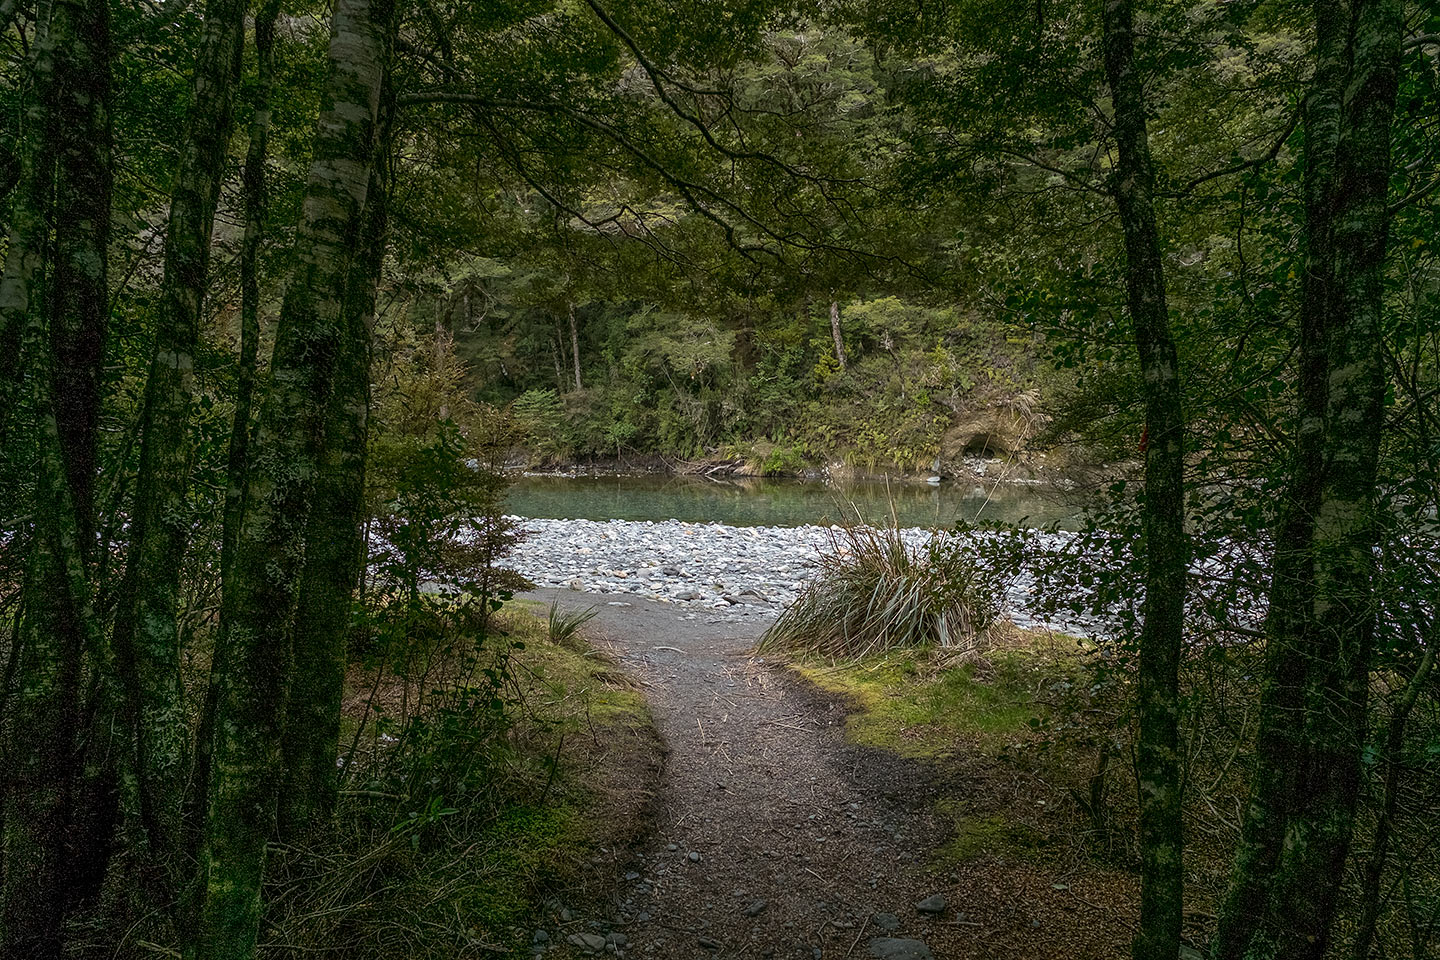 Fantail Falls, Mount Aspiring National Park, New Zealand